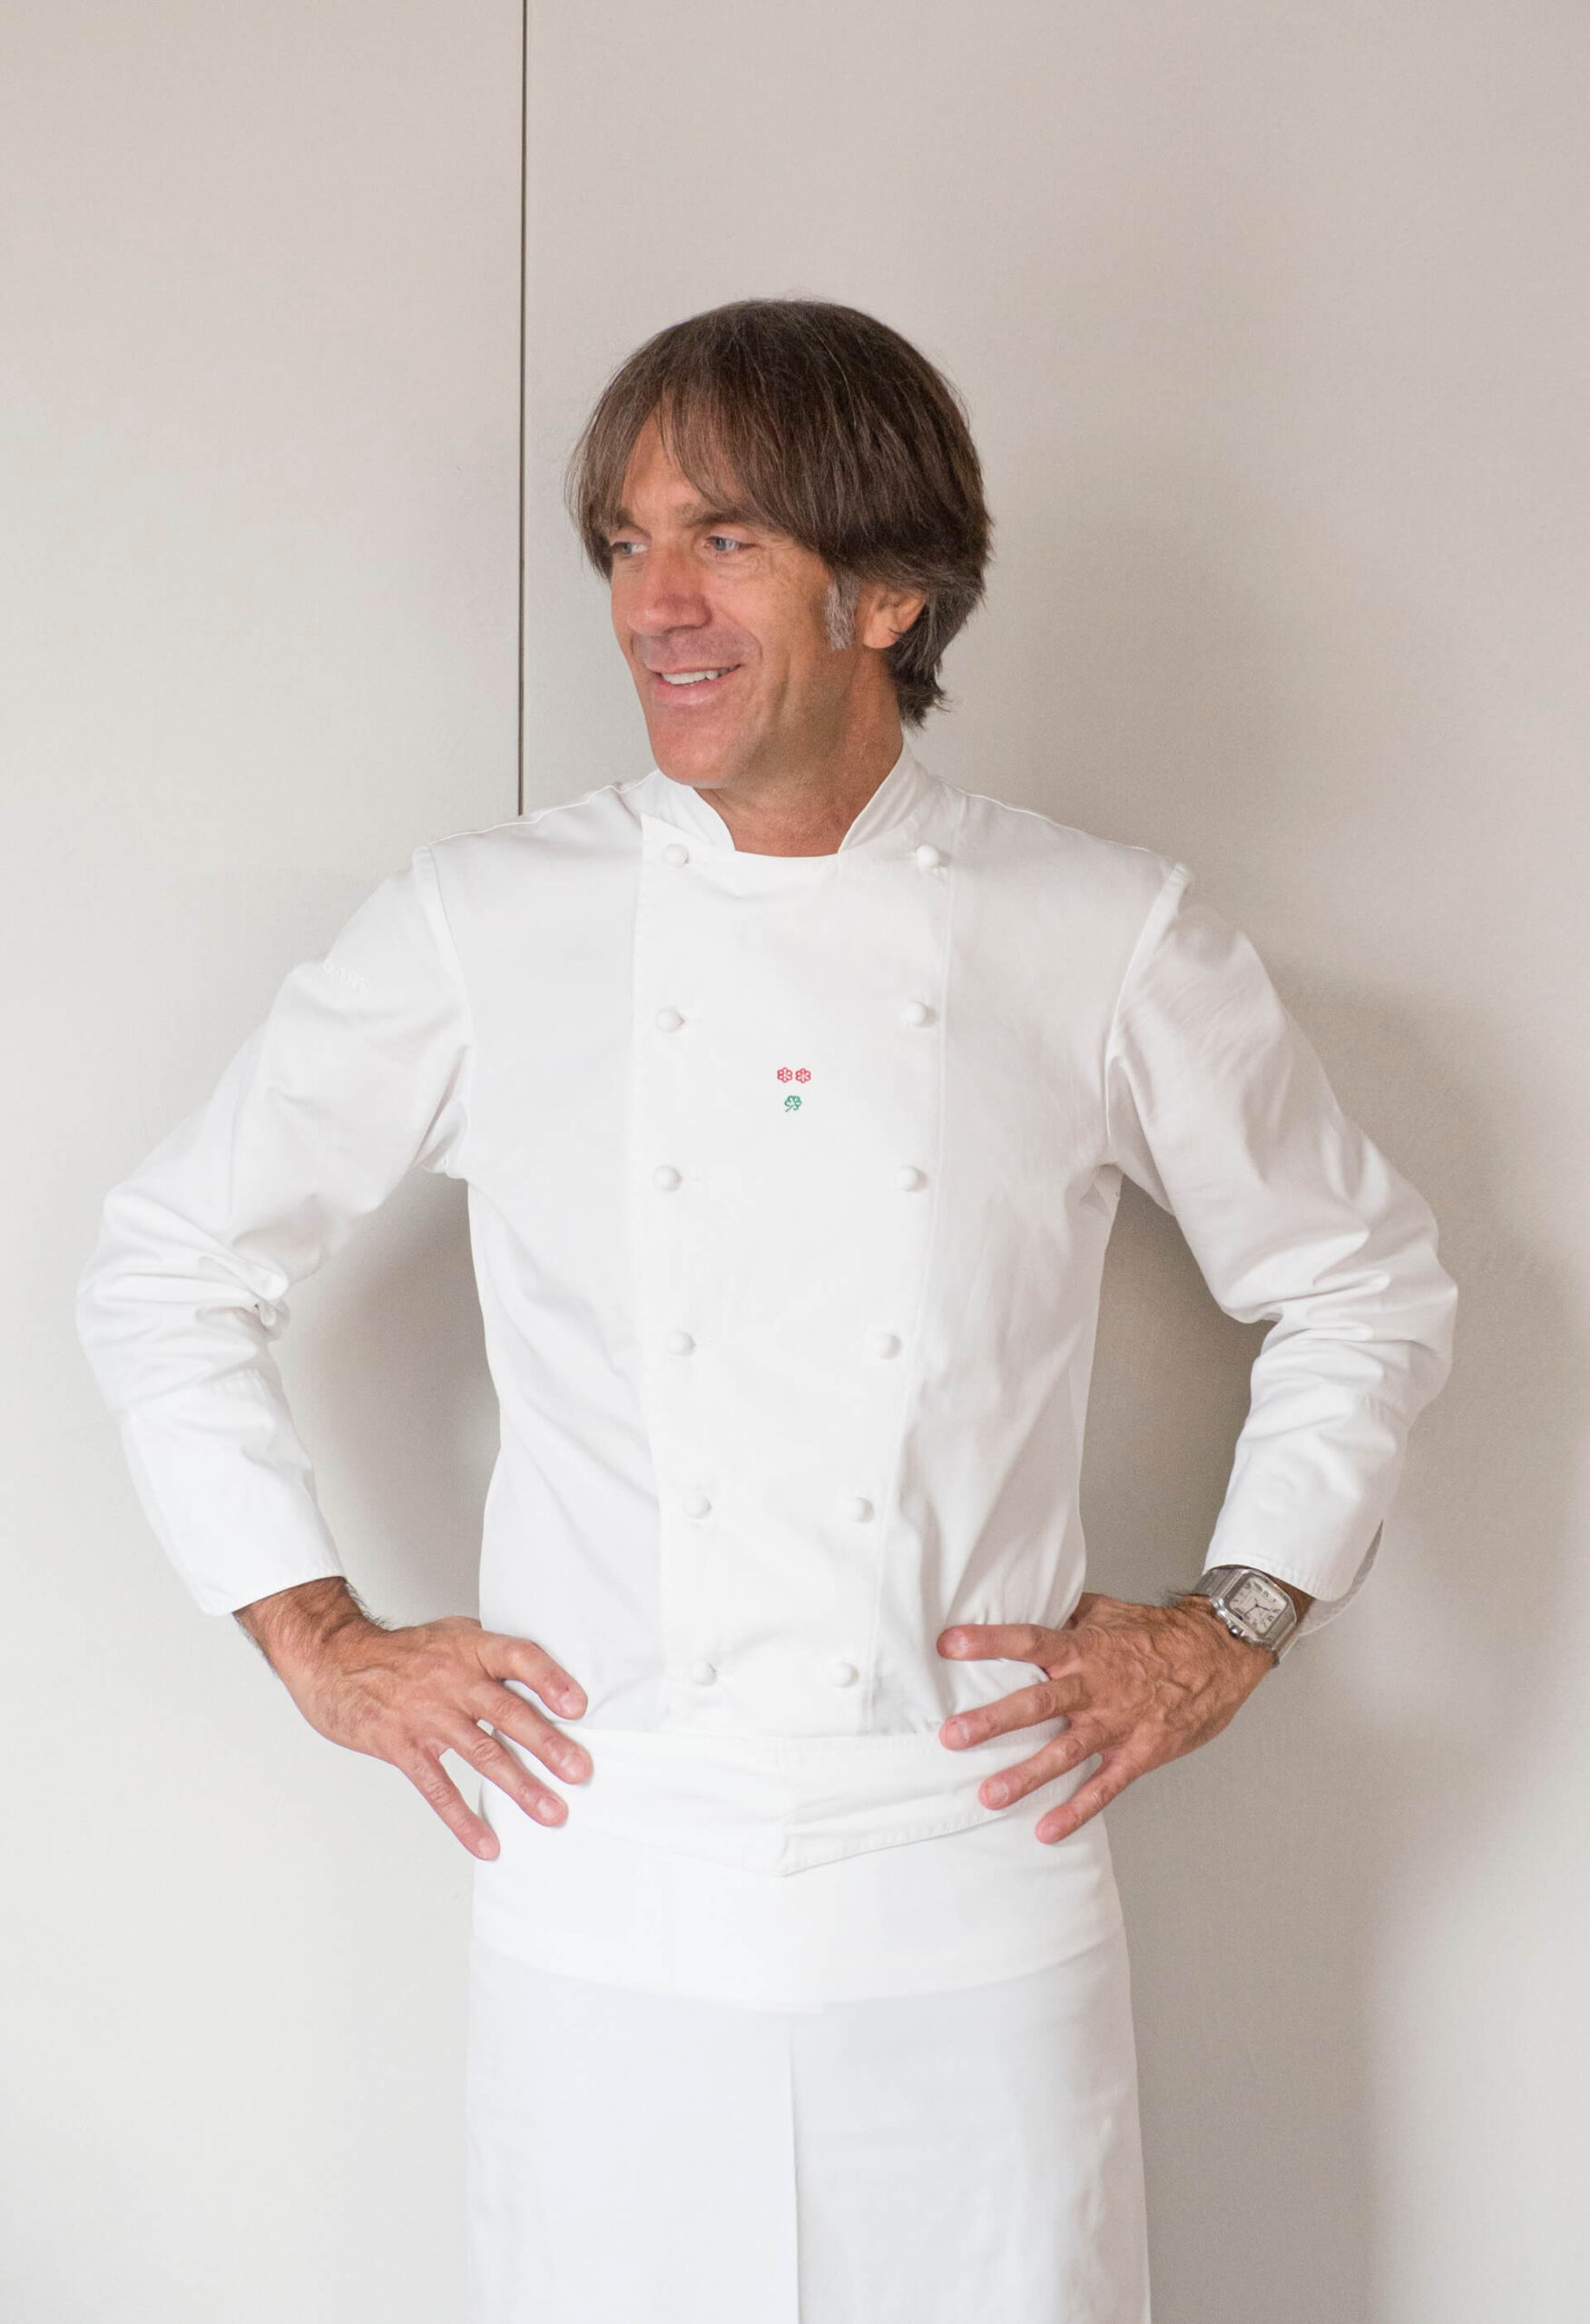 Chef Davide Oldani